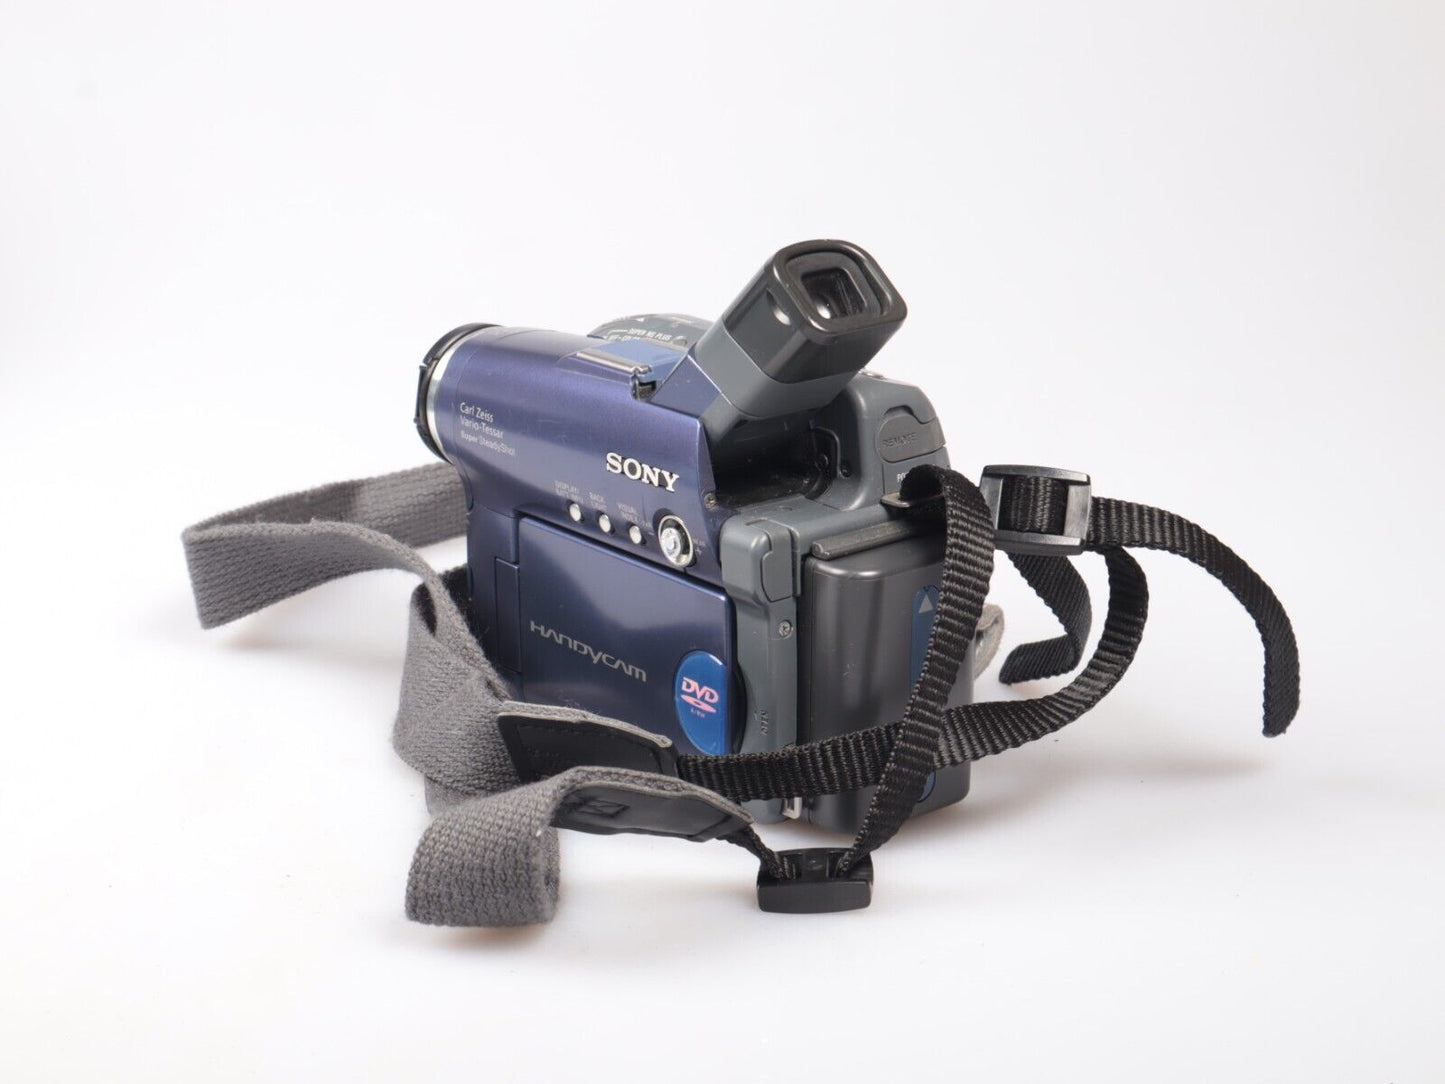 Sony Handycam DCR-DVD91 E PAL | Digital Camcorder | DVD